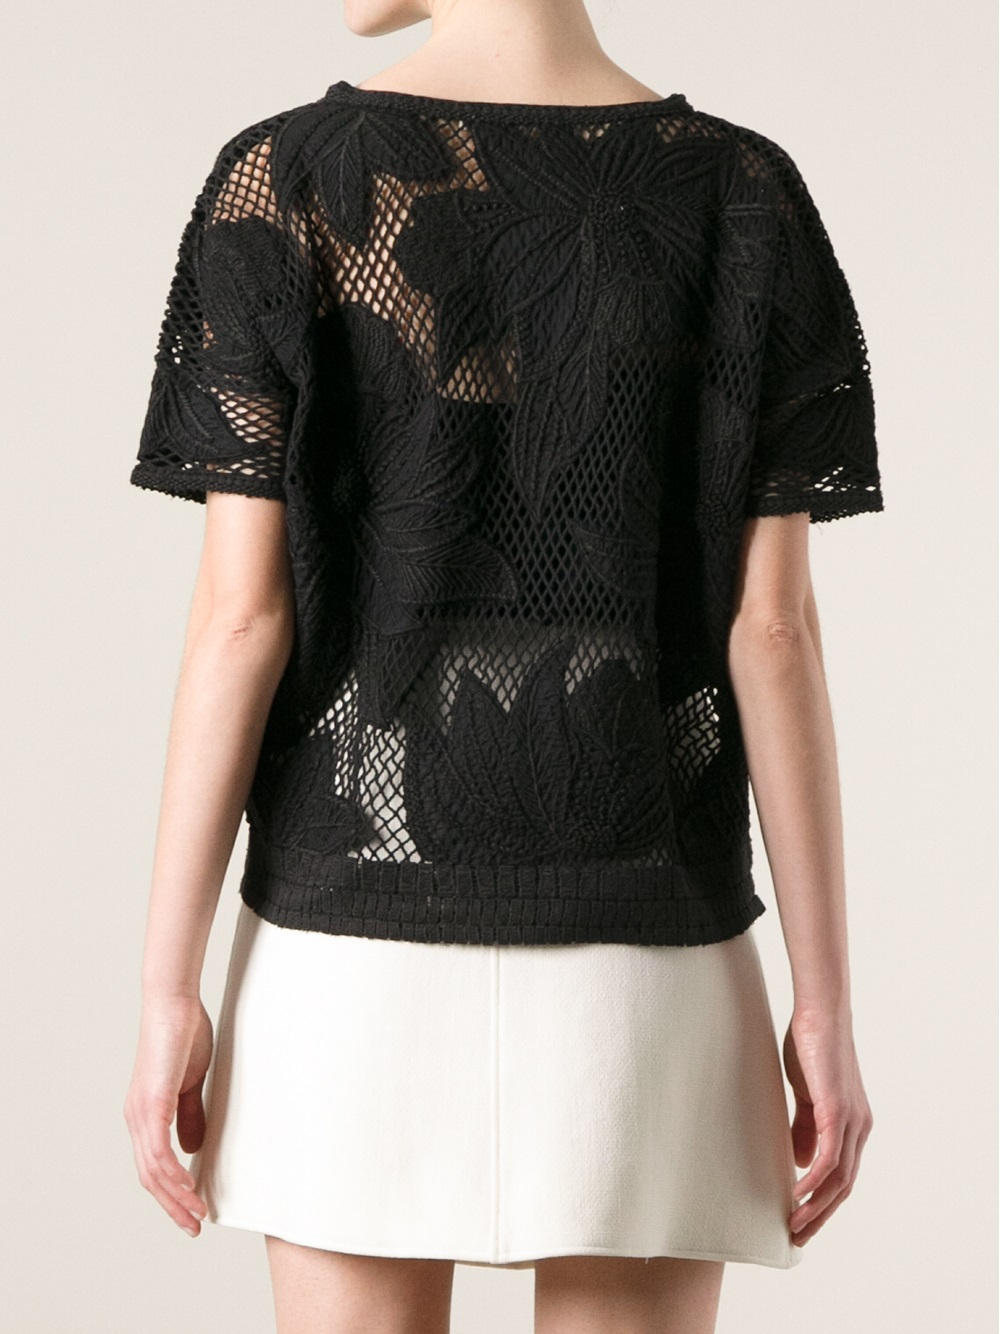 Étoile Isabel Marant Calice Crochet Top in Black - Lyst